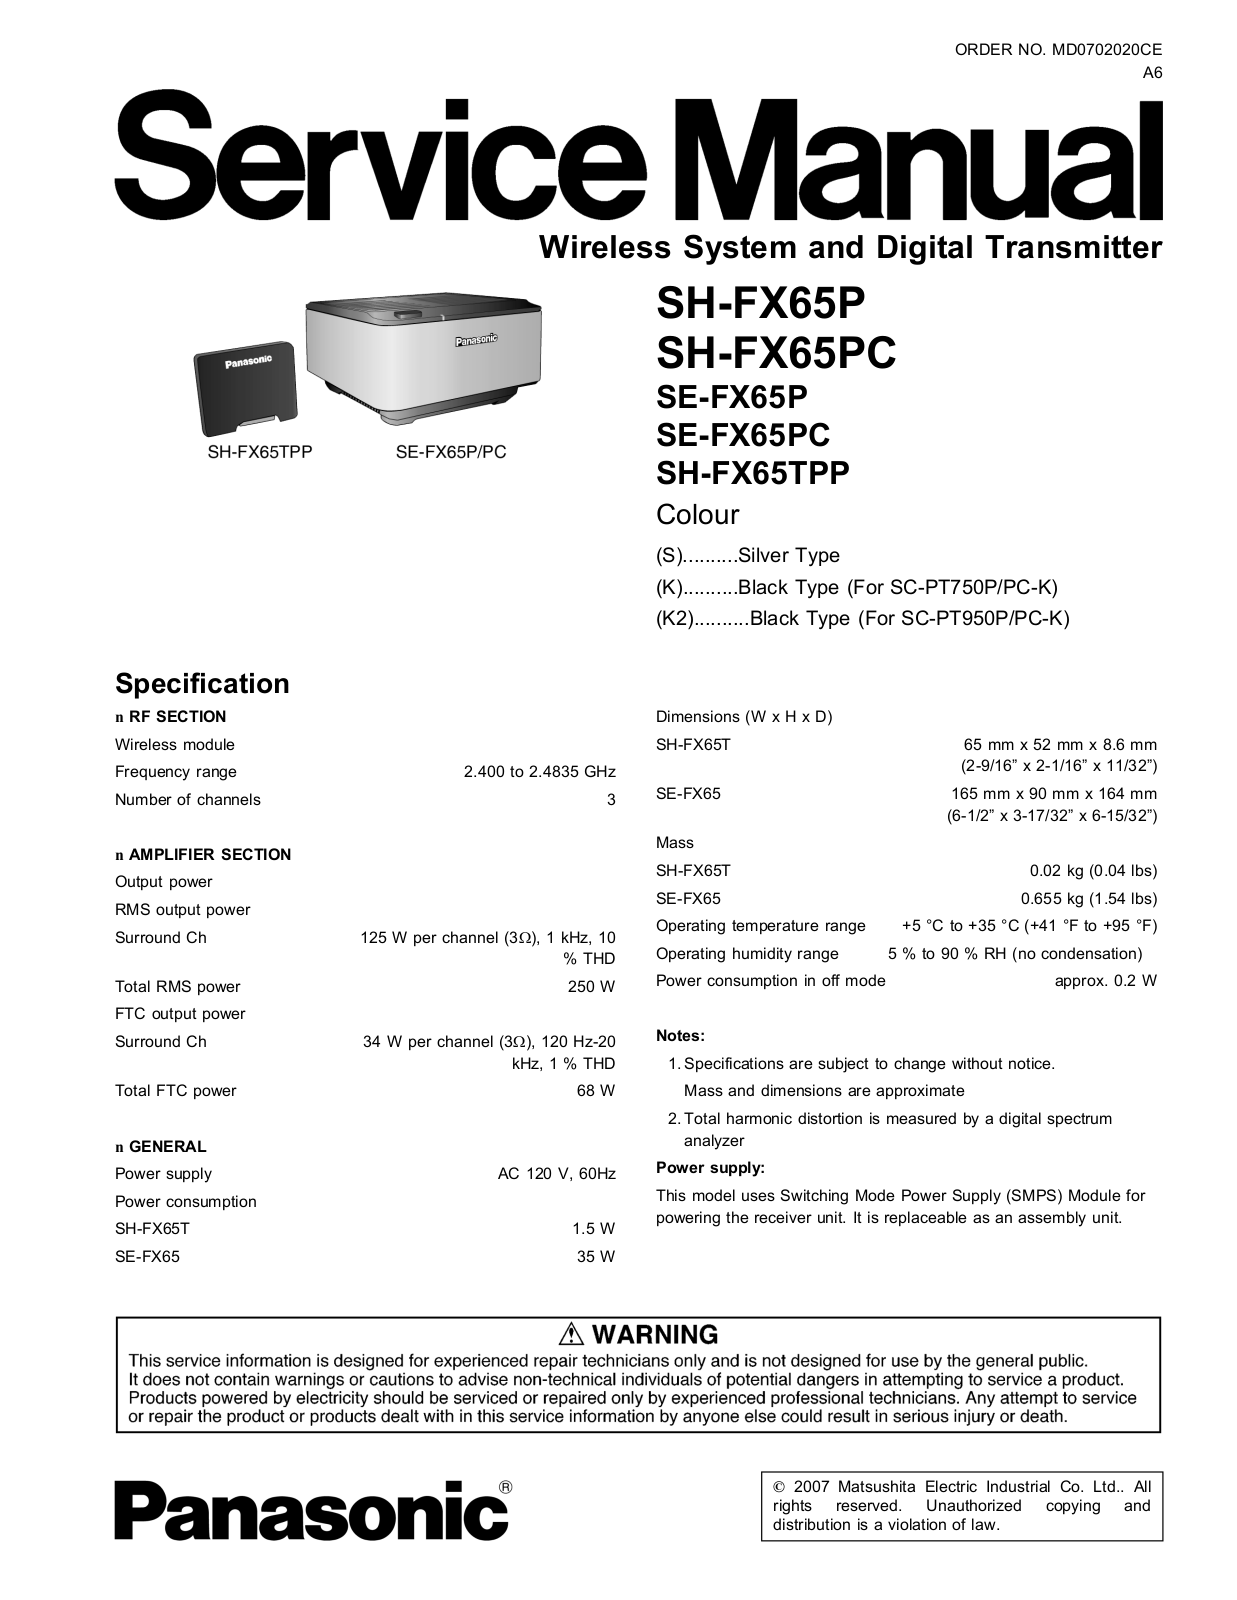 Panasonic SEFX-65-P, SEFX-65-PC, SHFX-65-P, SHFX-65-PC, SHFX-65-TPP Service manual